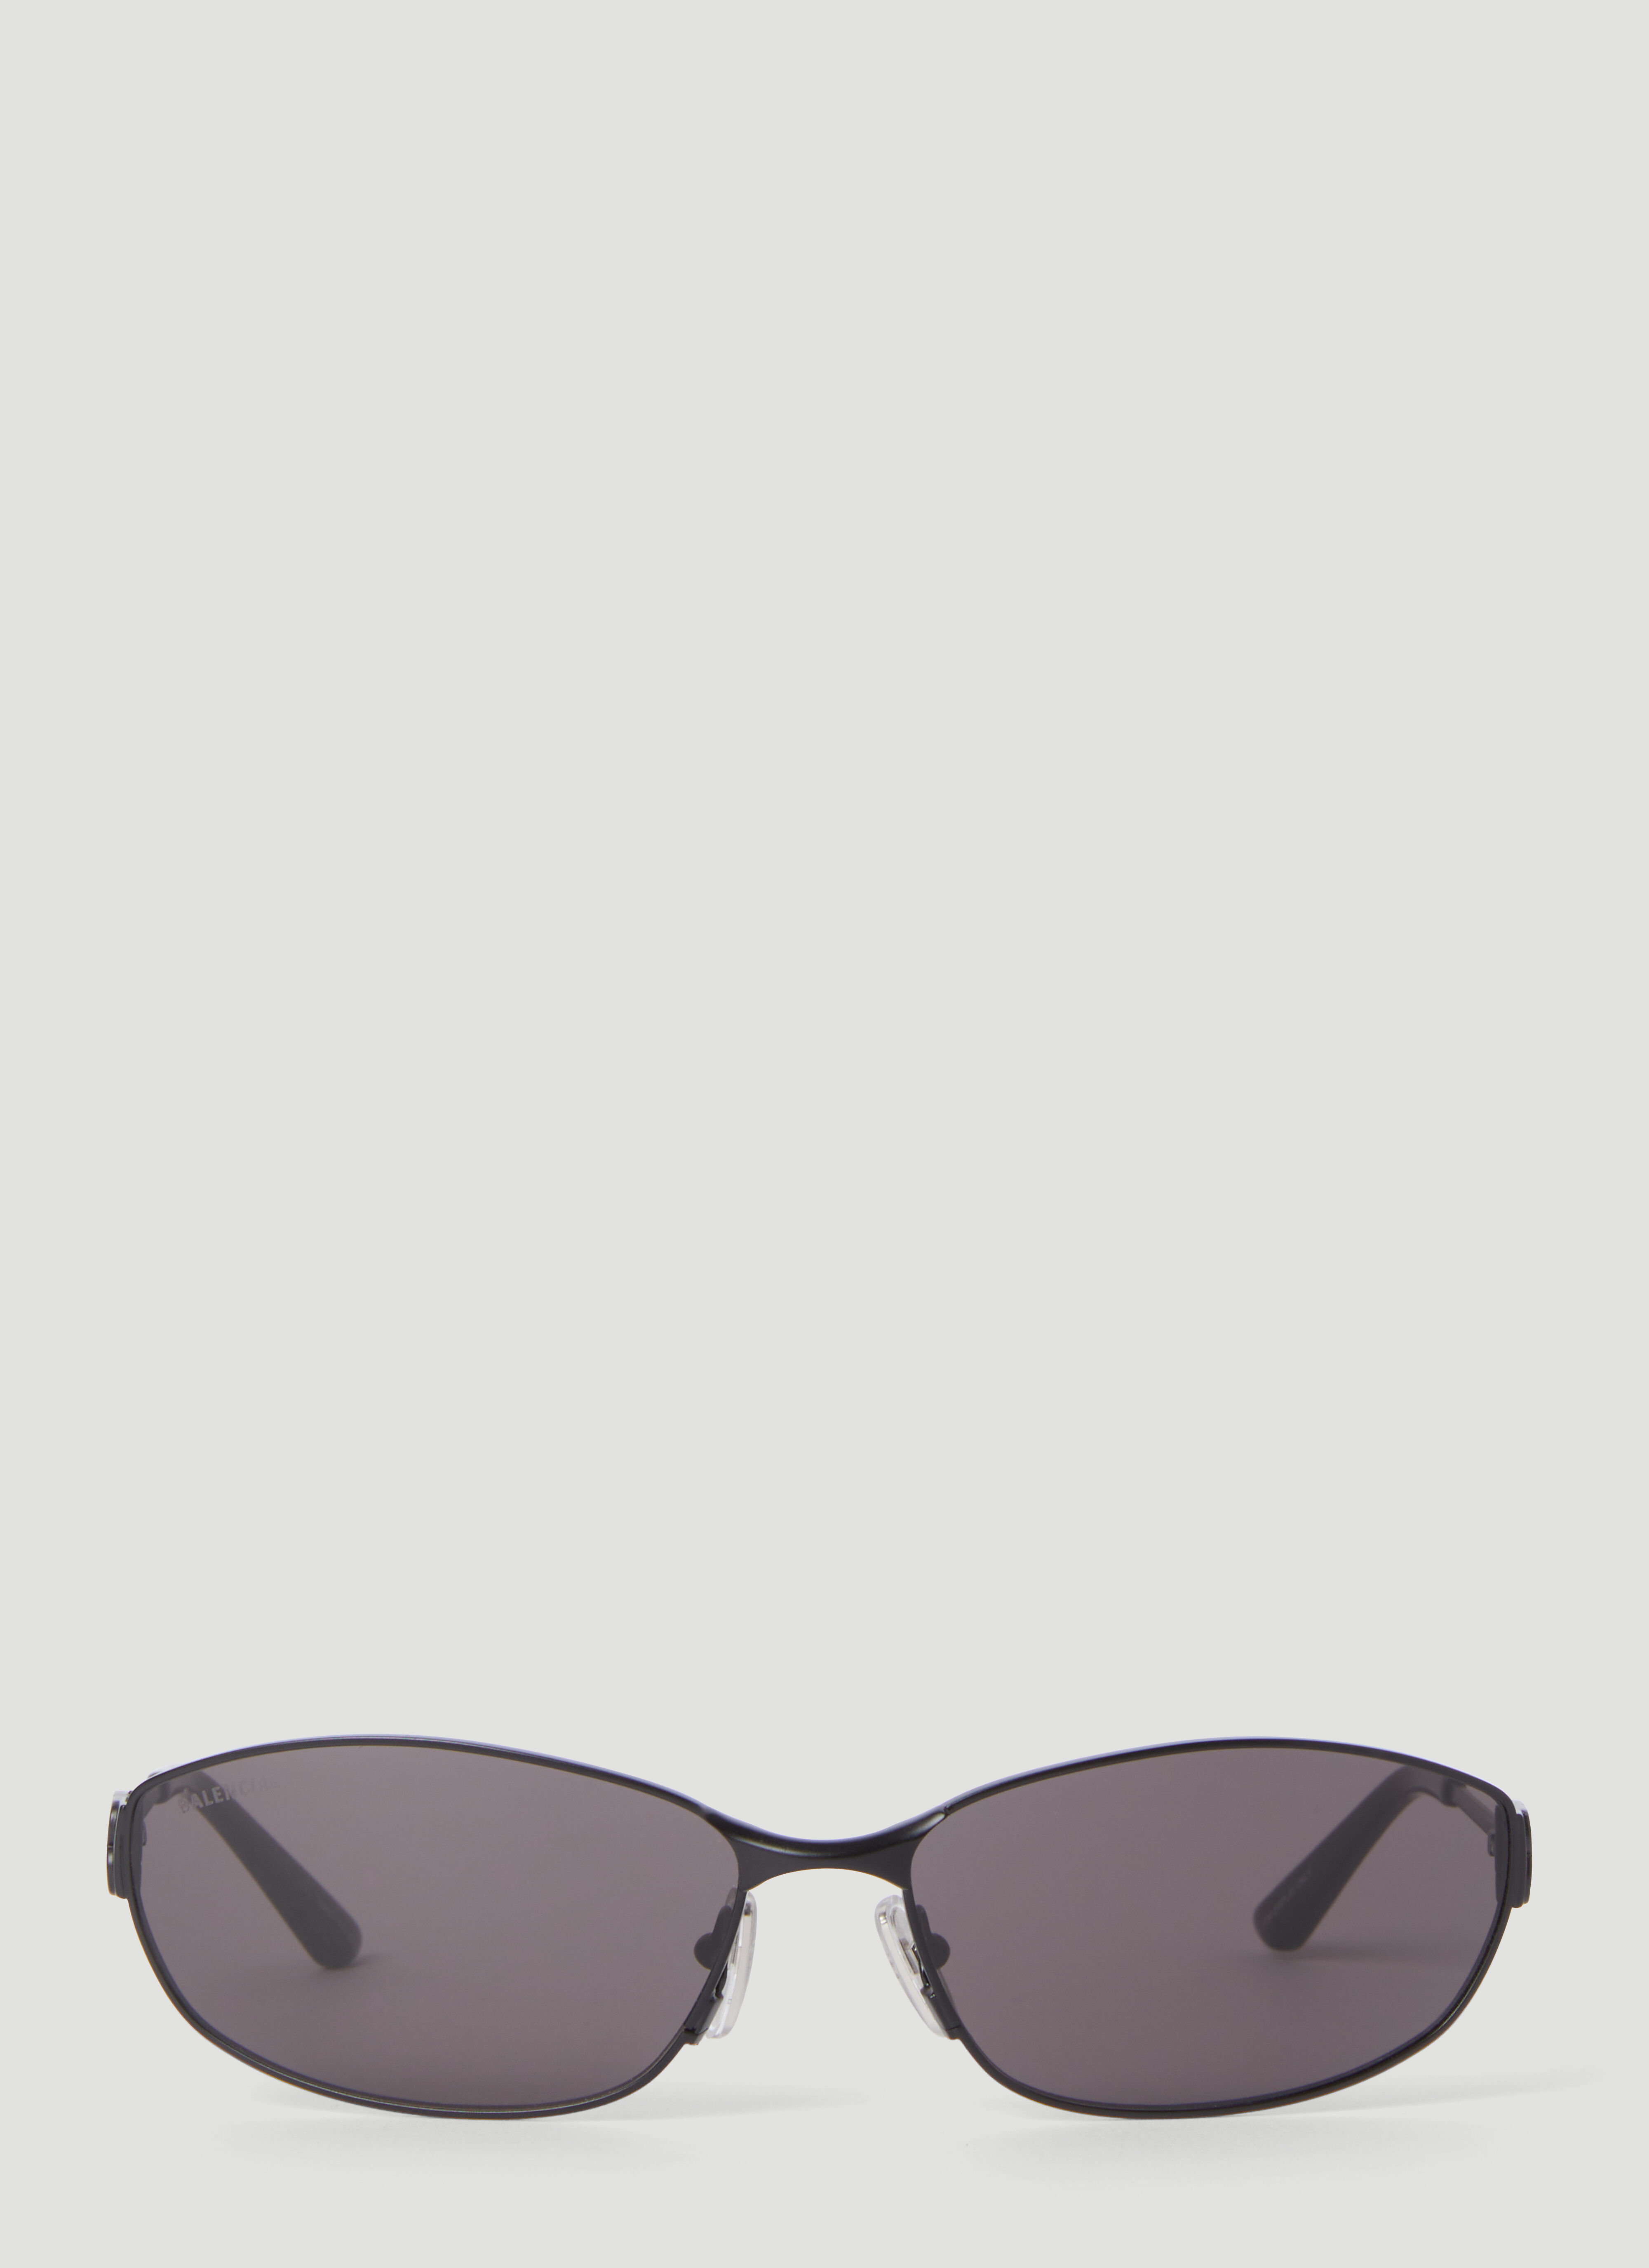 Acne Studios Mercury Oval Sunglasses Silver cns0356002